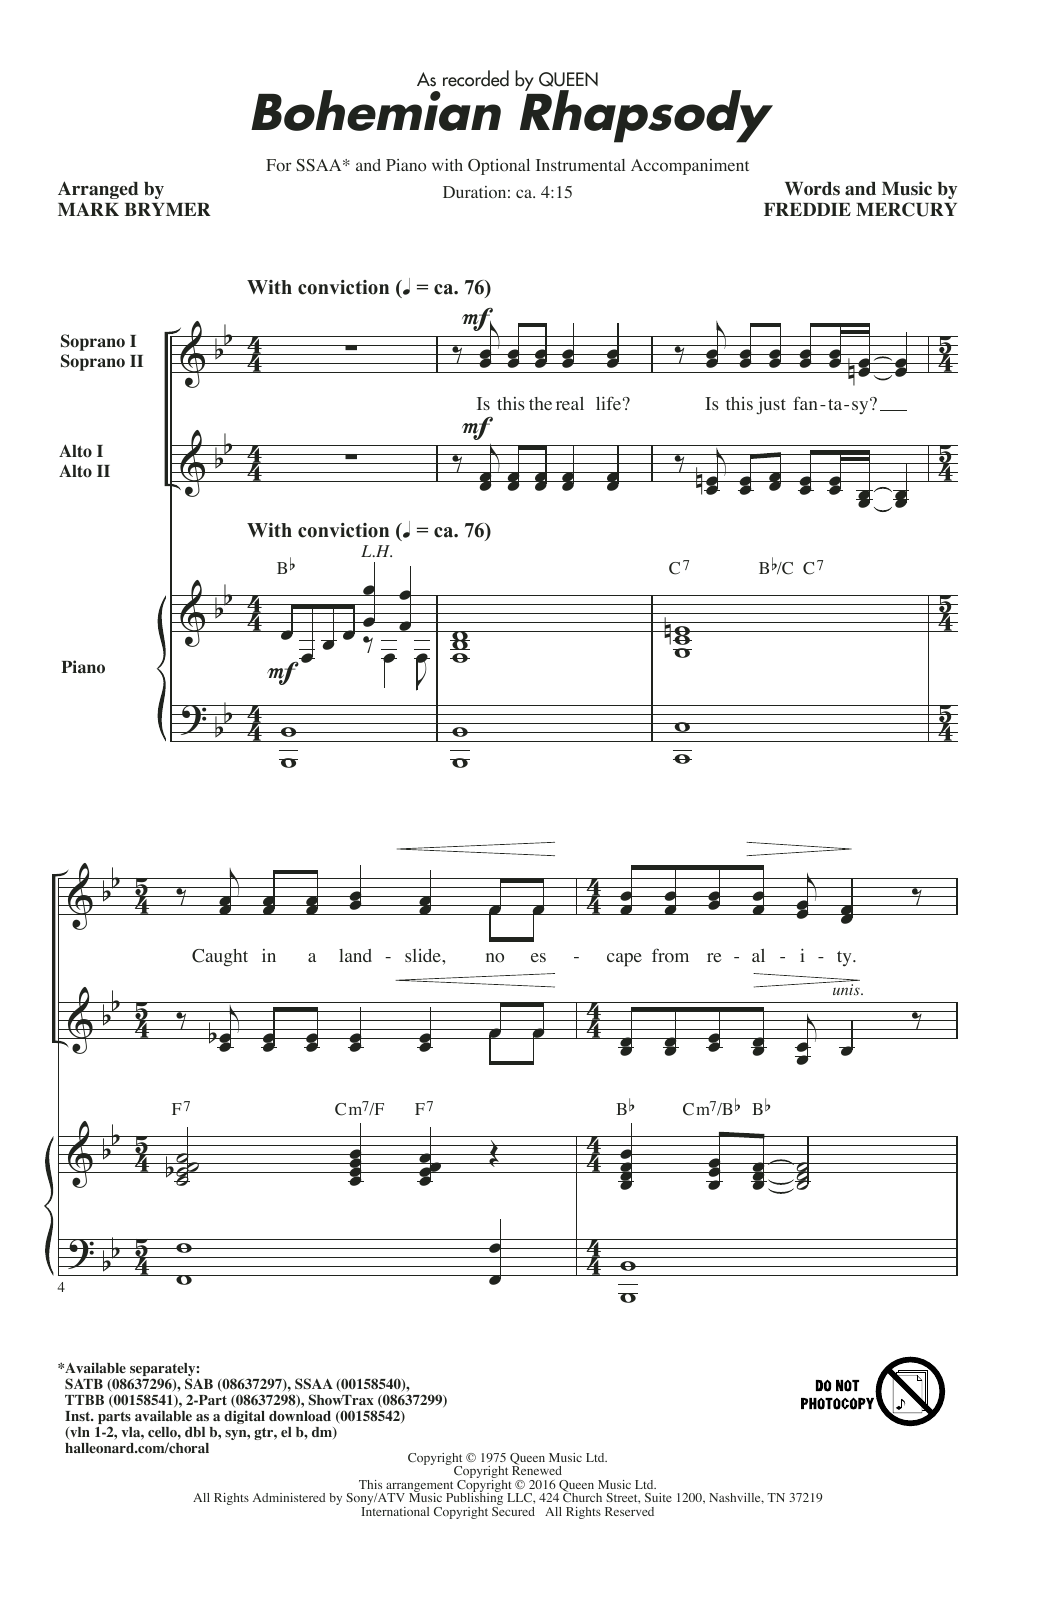 Queen Bohemian Rhapsody (arr. Mark Brymer) Sheet Music Notes & Chords for SAB Choir - Download or Print PDF